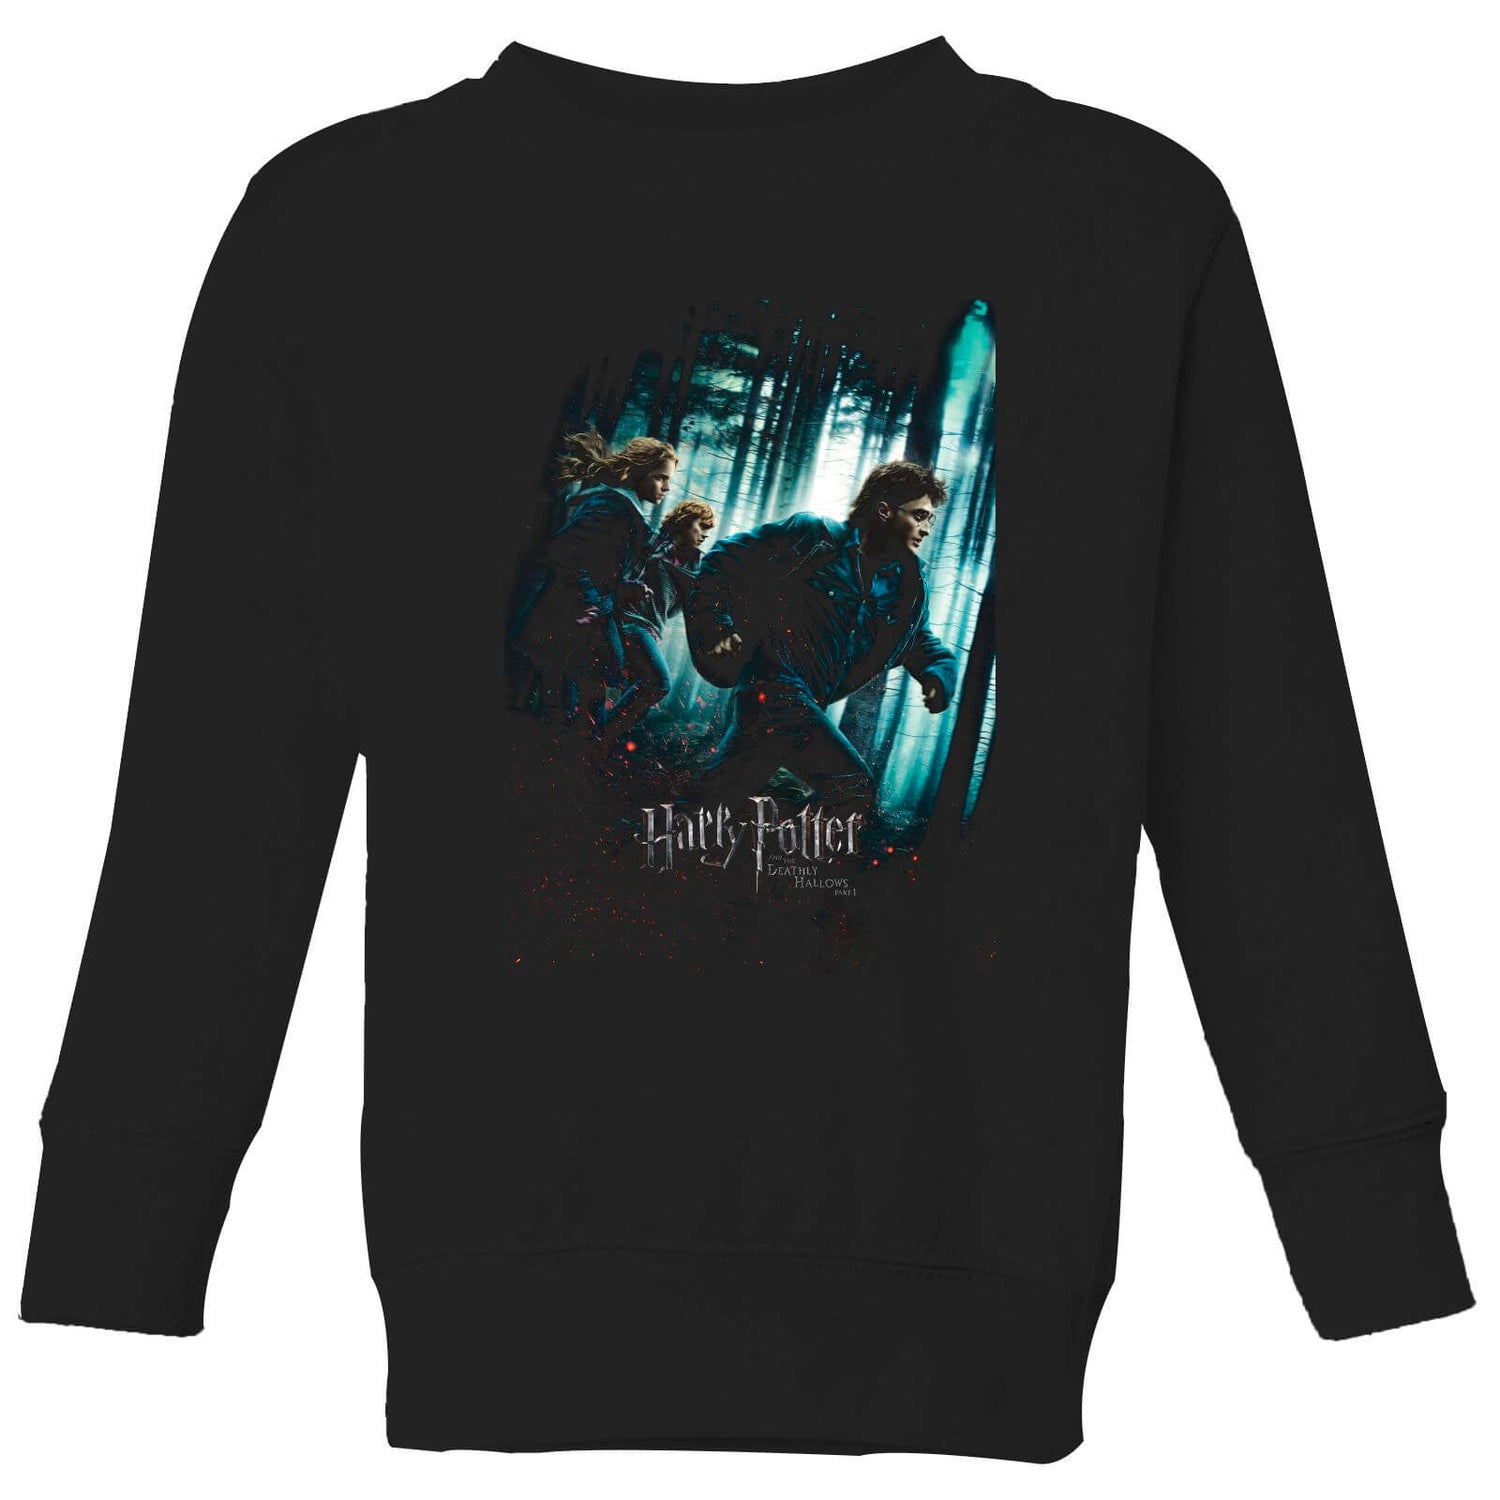 Harry Potter Deathly Hallows Part 1 Kids' Sweatshirt - Black